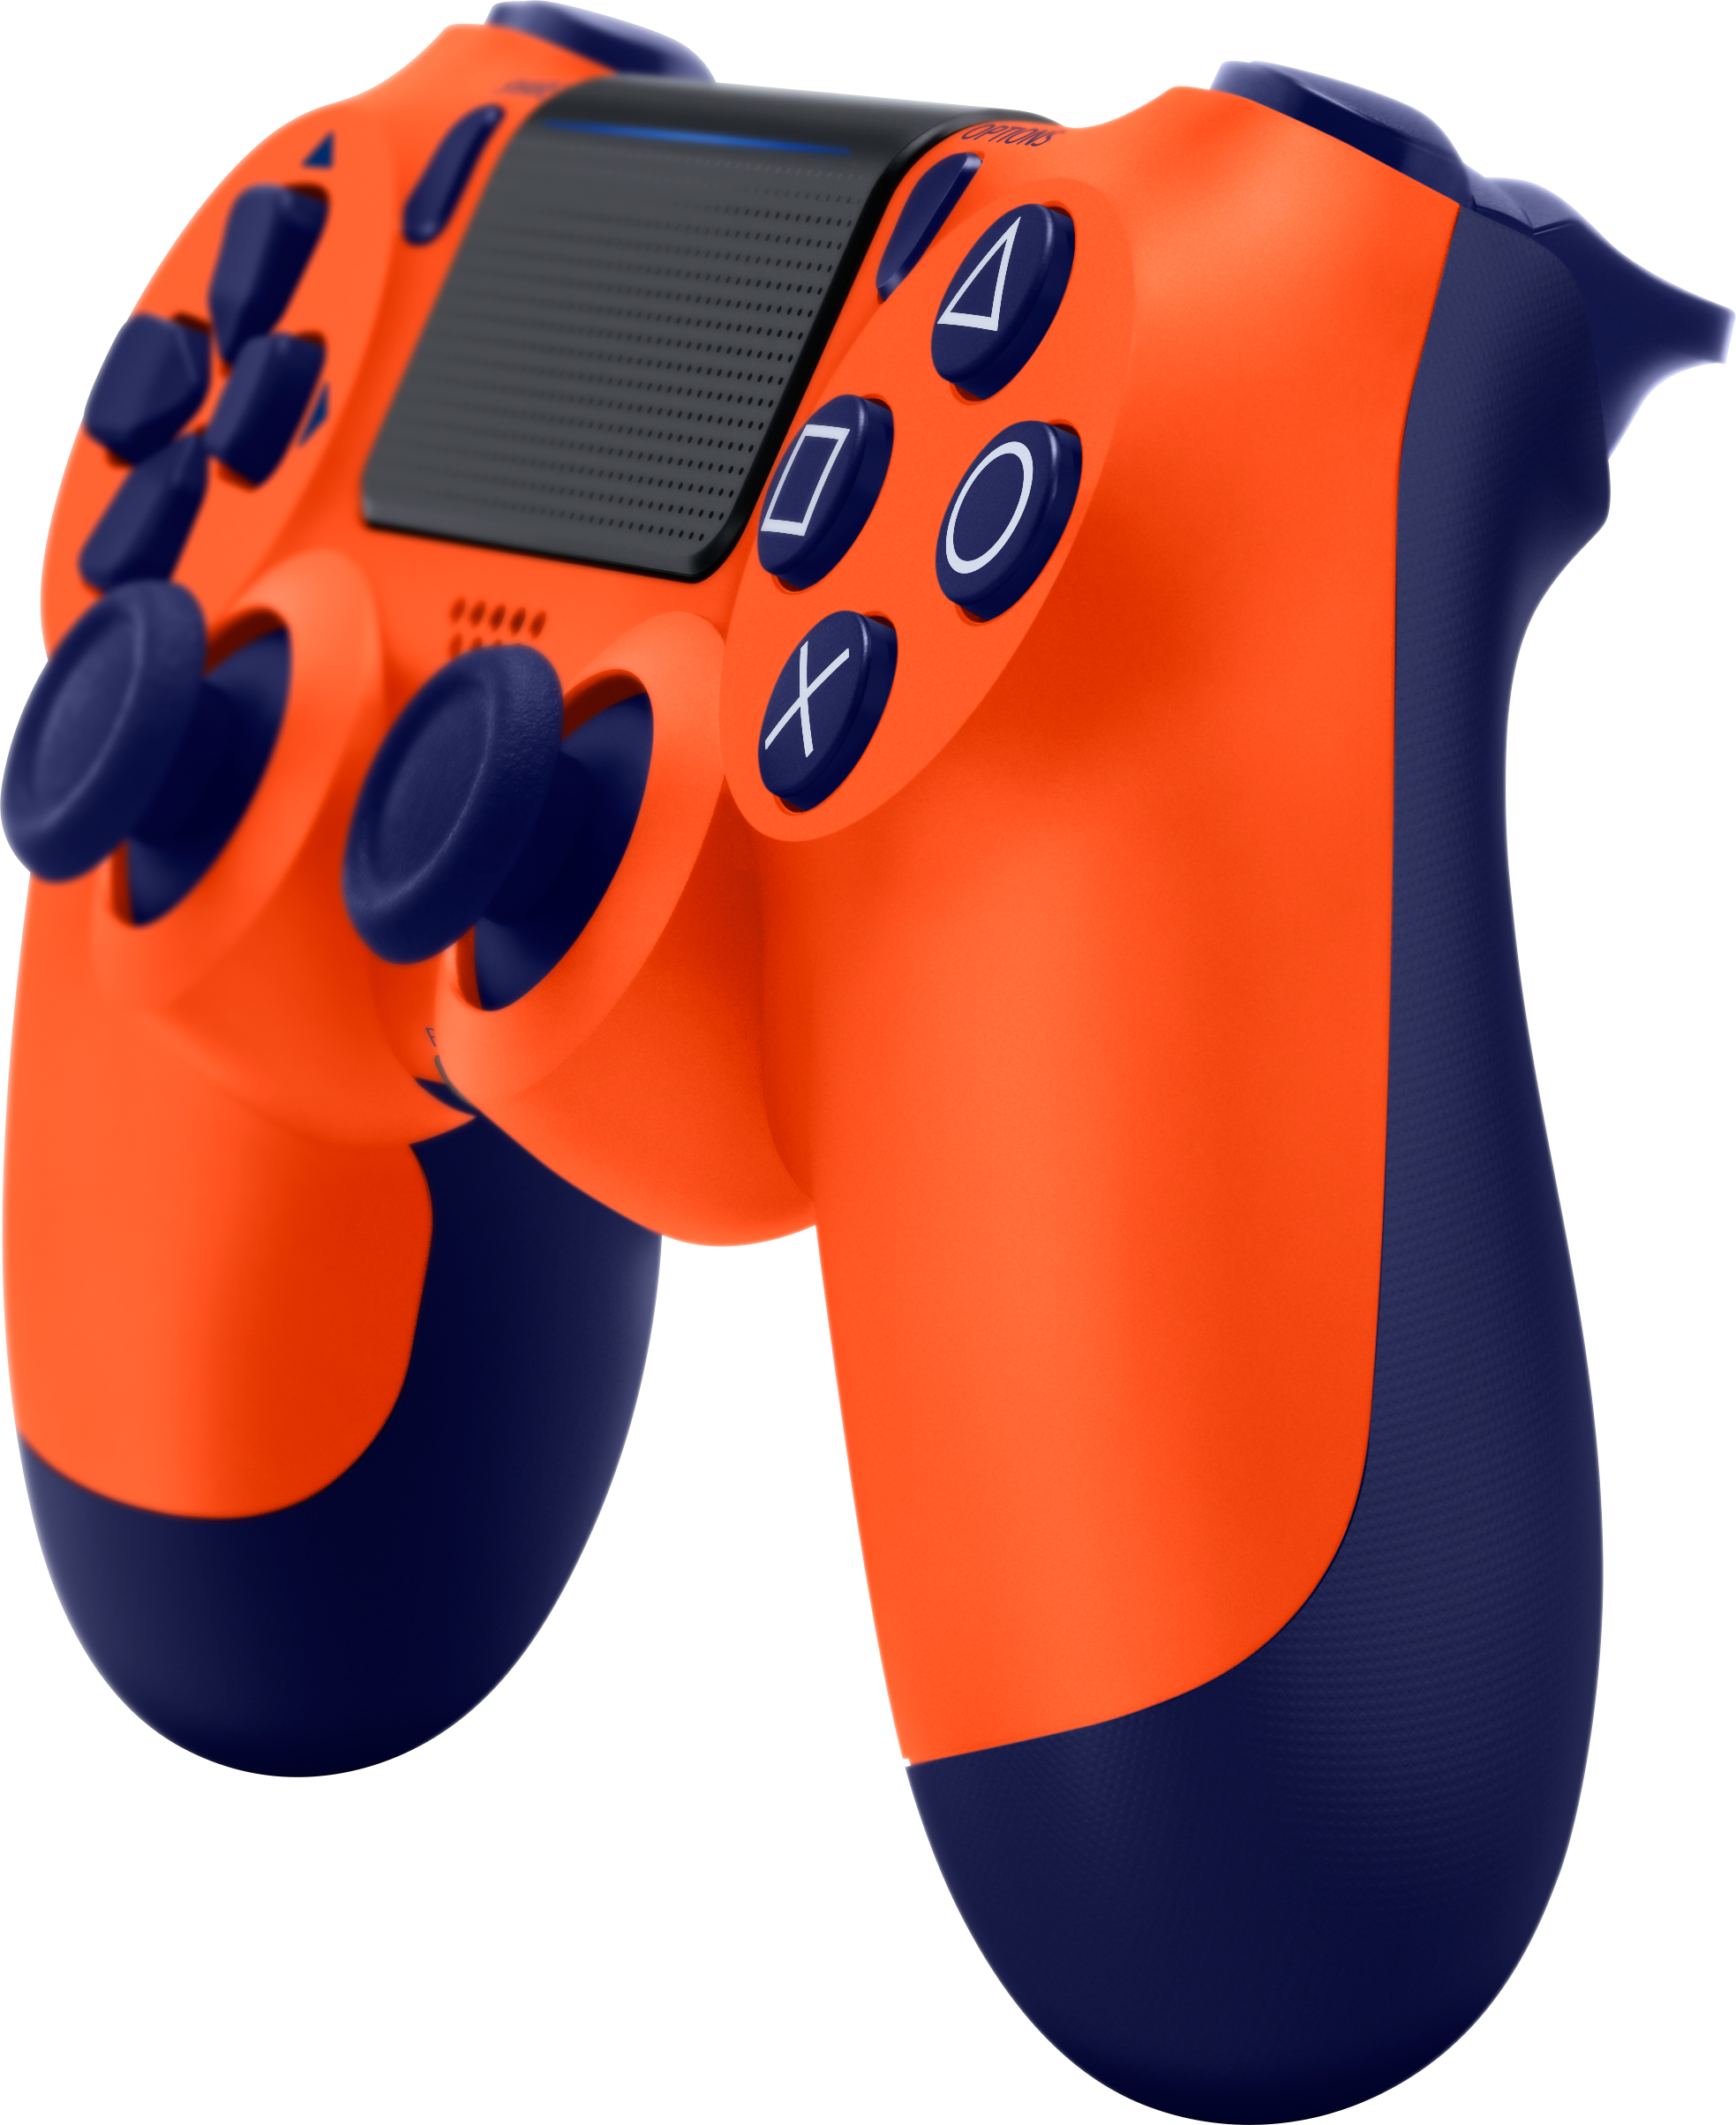 DualShock 4 v2 (Orange)